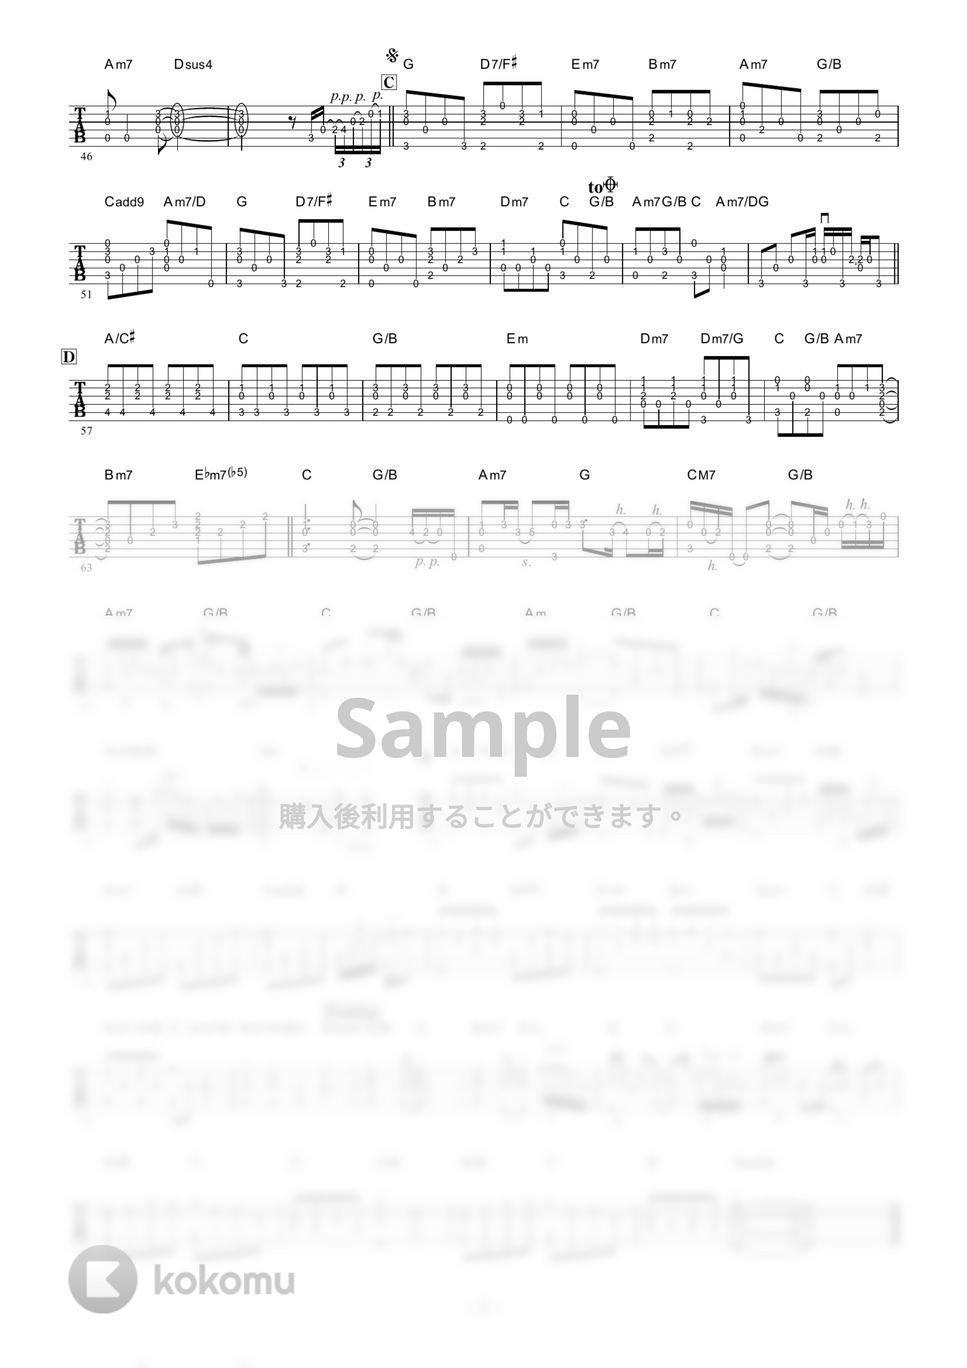 HY - ３６６日 (ギター伴奏/イントロ・間奏ソロギター) by 伴奏屋TAB譜